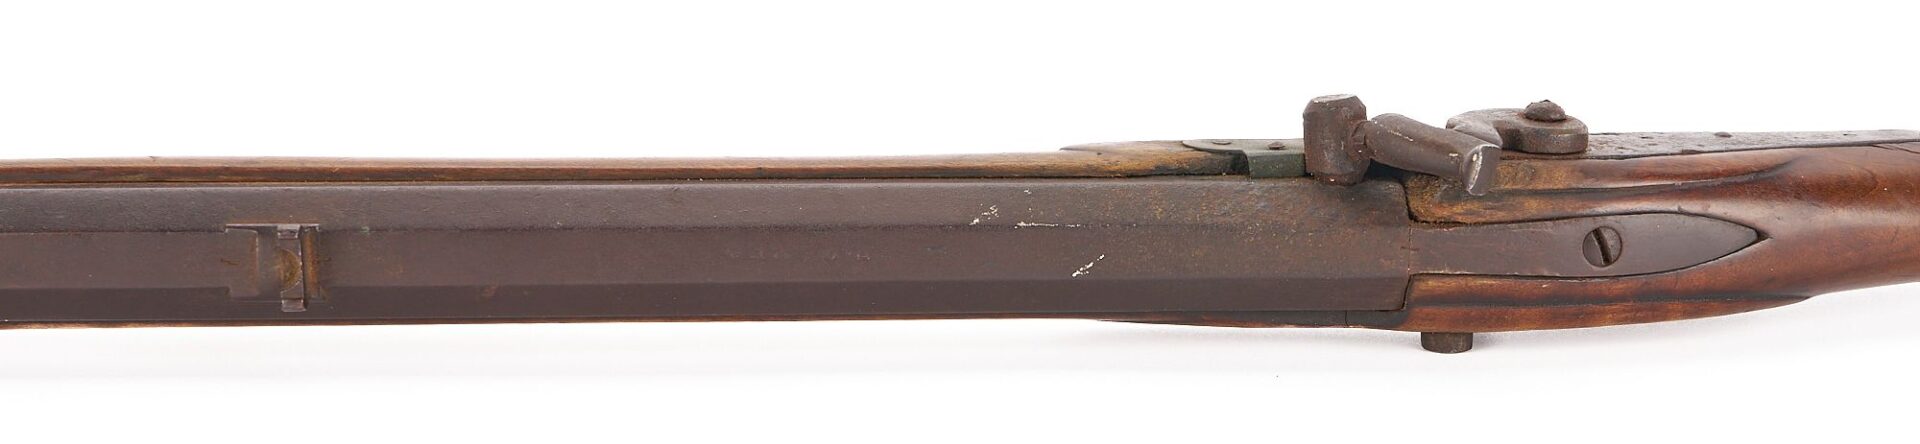 Lot 532: Ohio Percussion Long Rifle, P. Kane